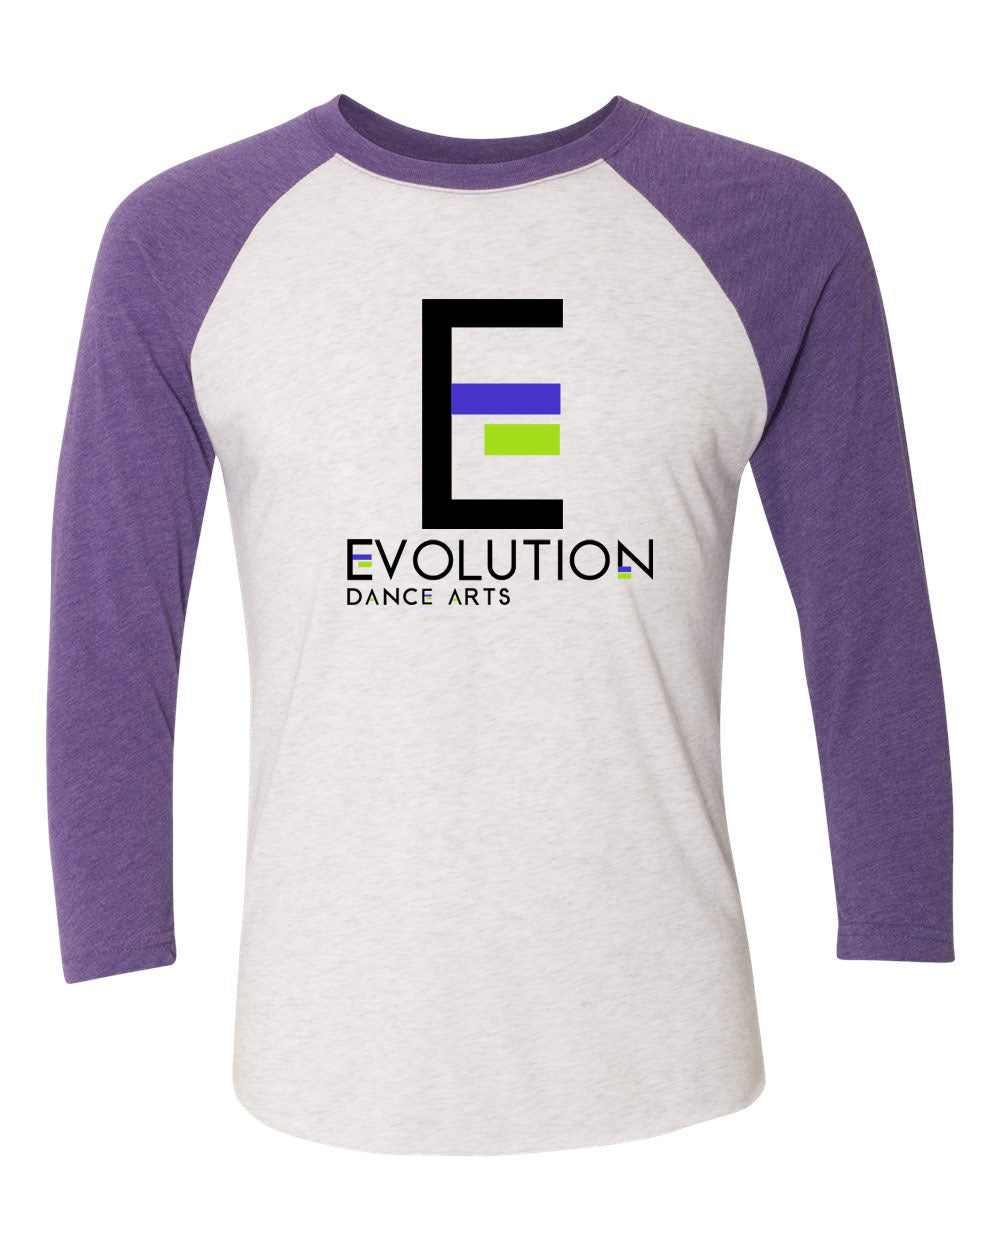 Evolution Dance Arts design 2 raglan shirt